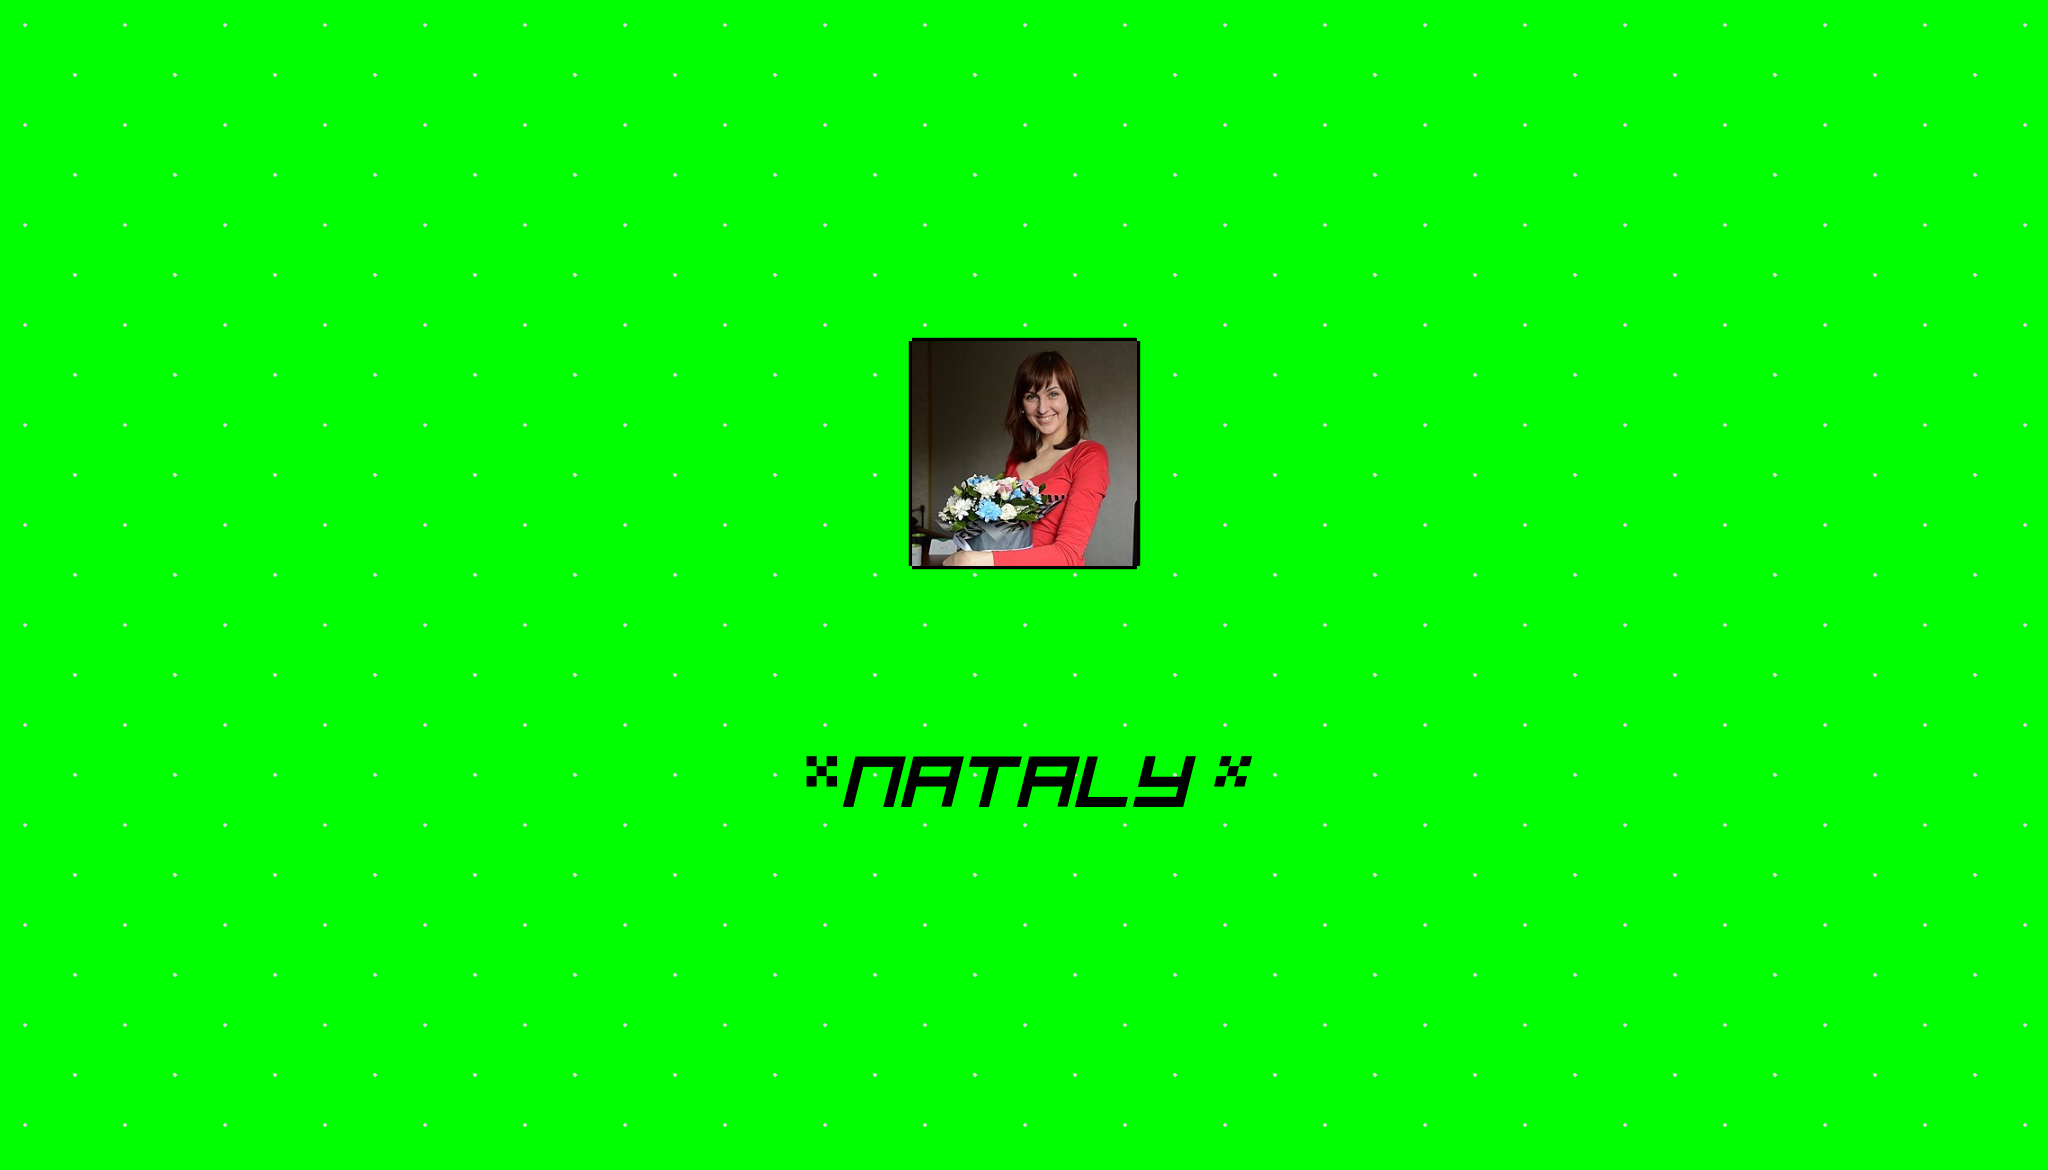 Nataly | Hacker Noon